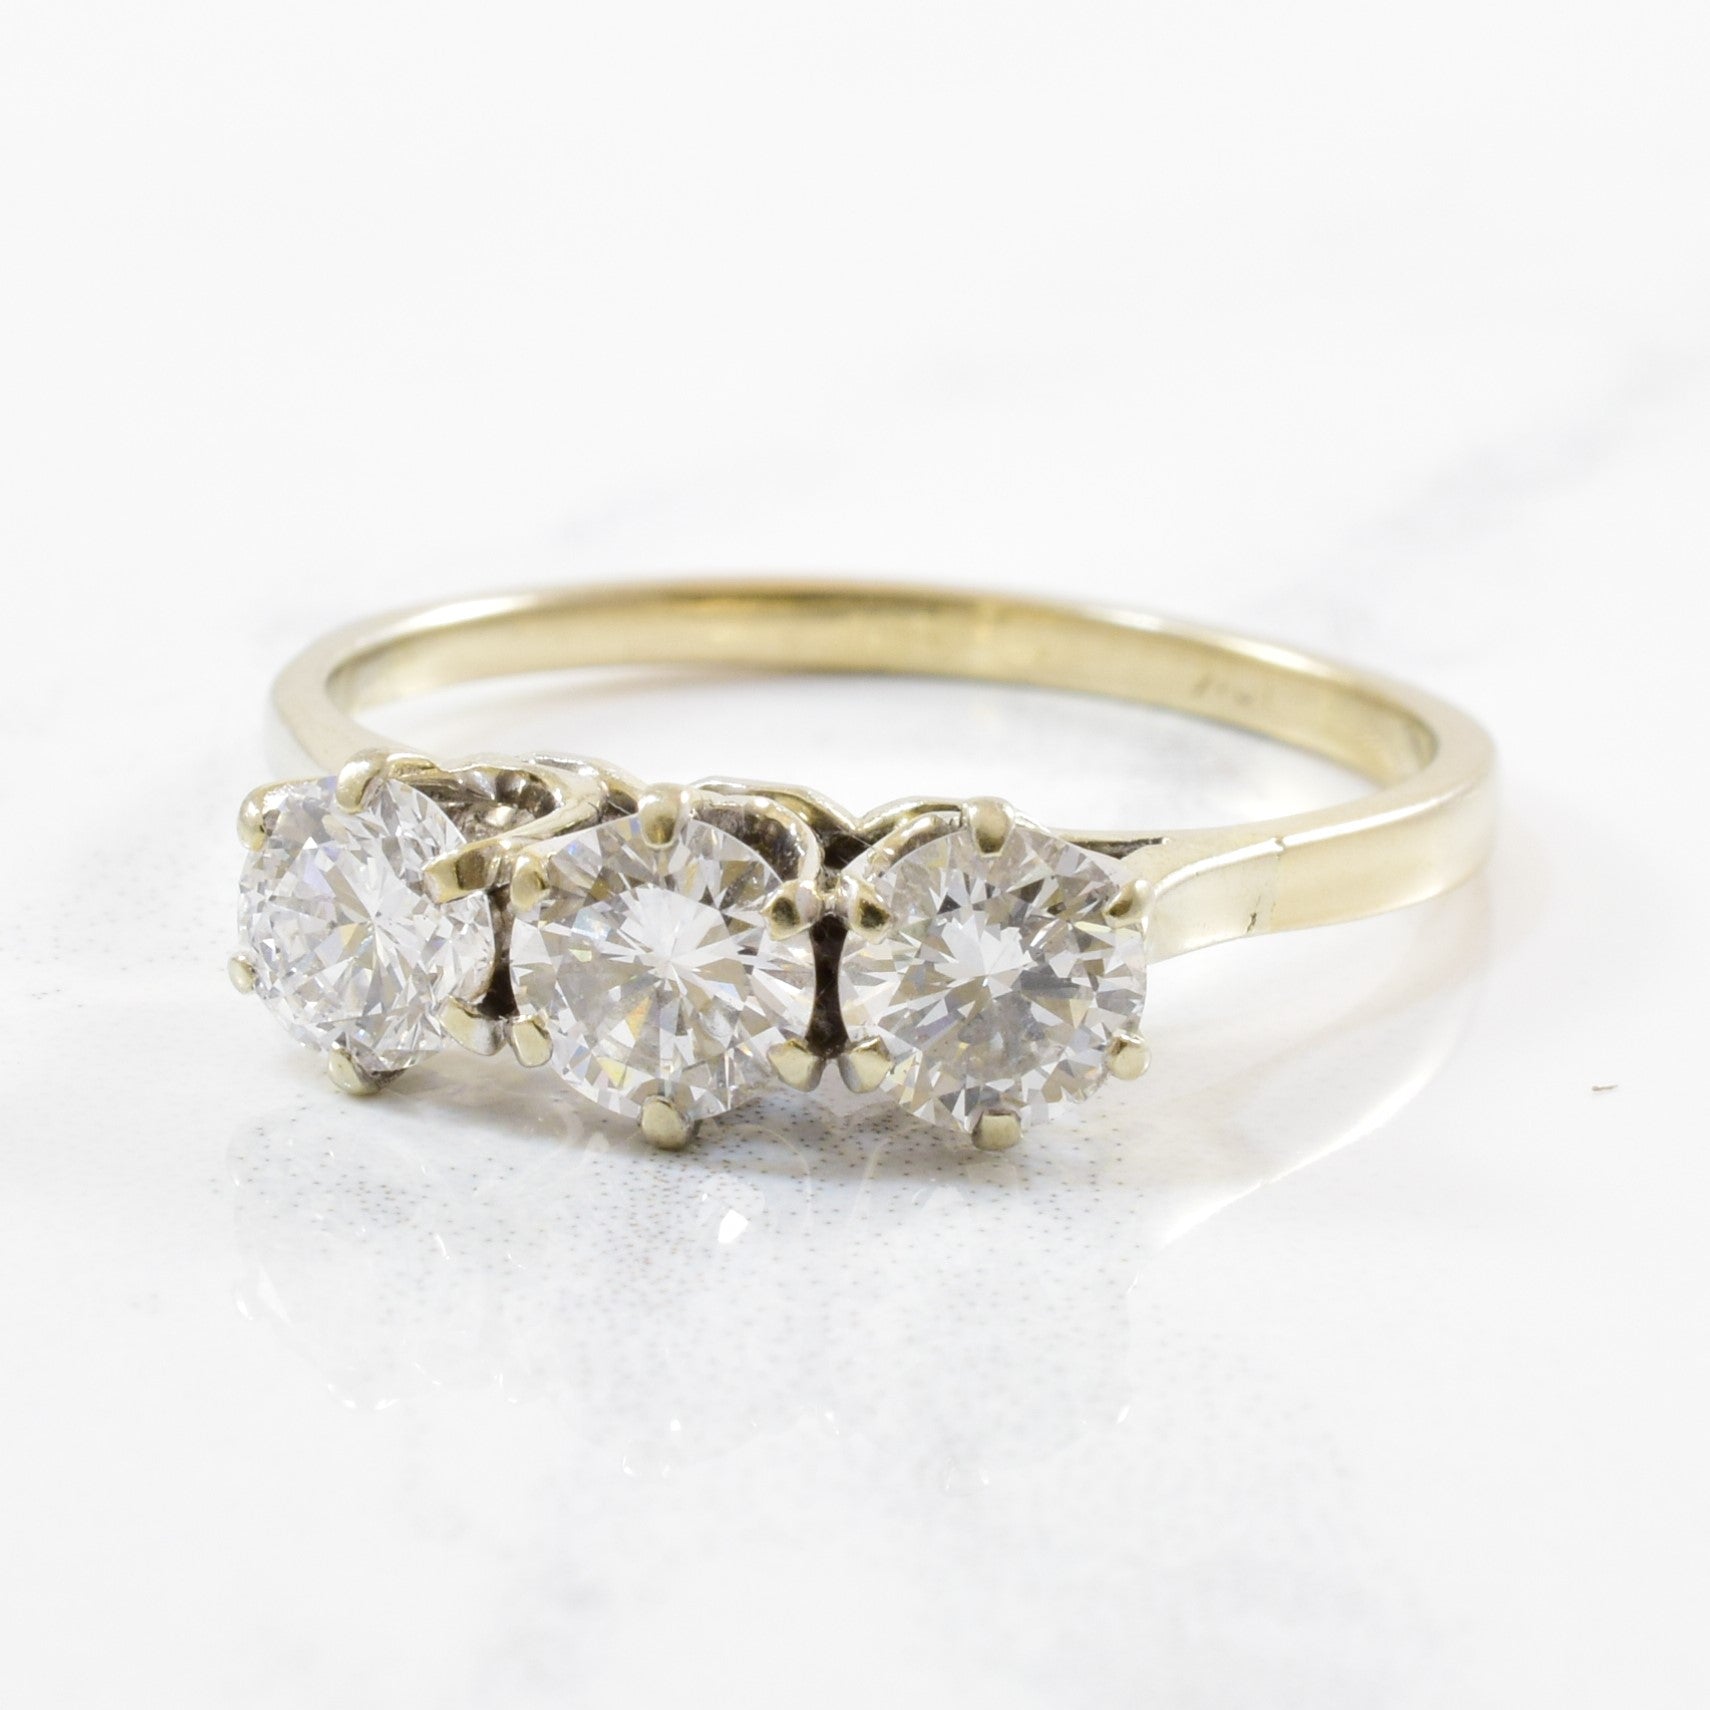 Canada vintage engagement ring, diamond engagement ring